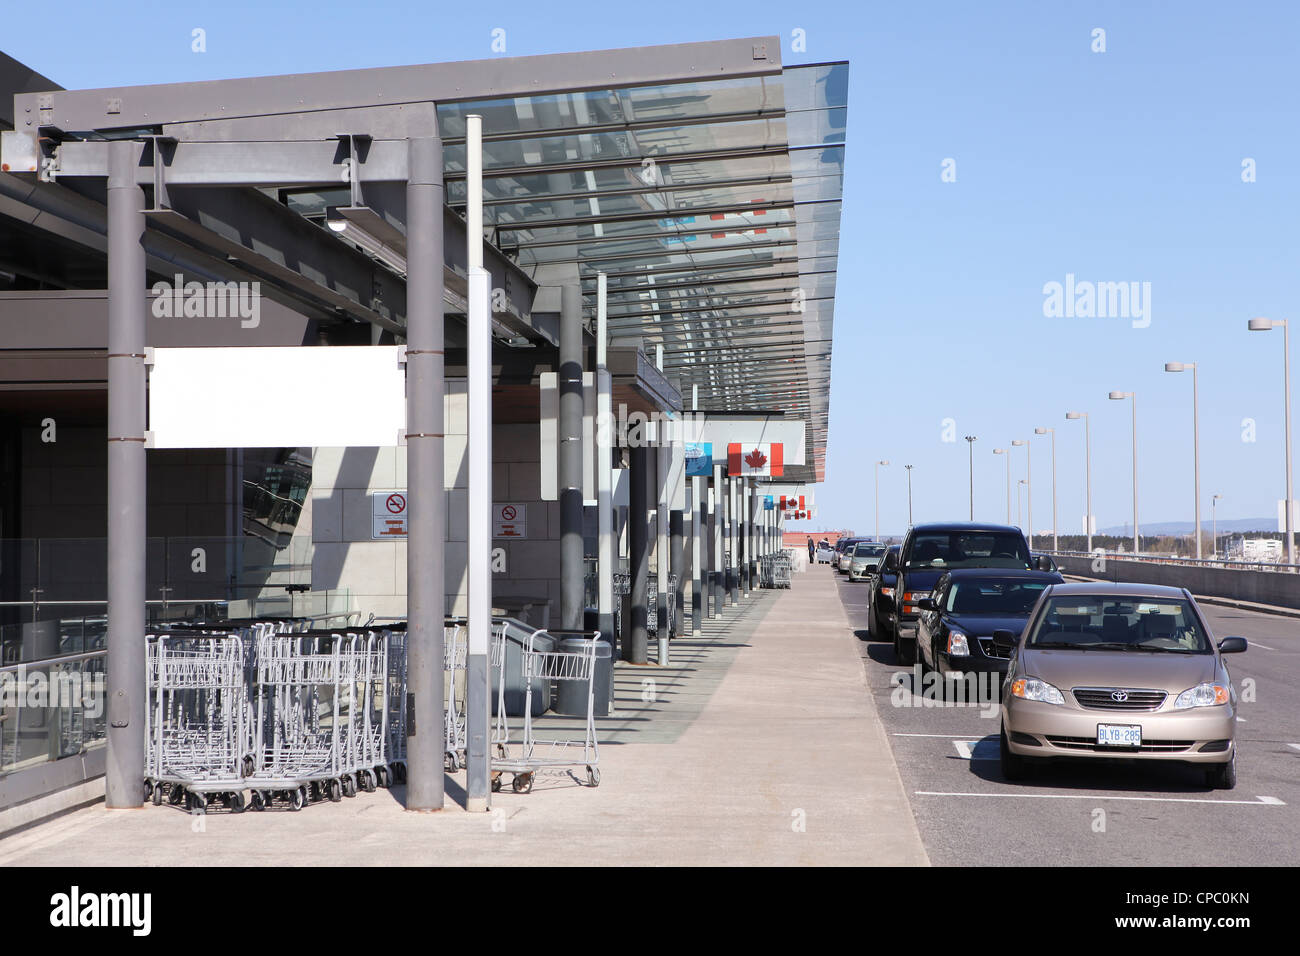 macdonald cartier international airport